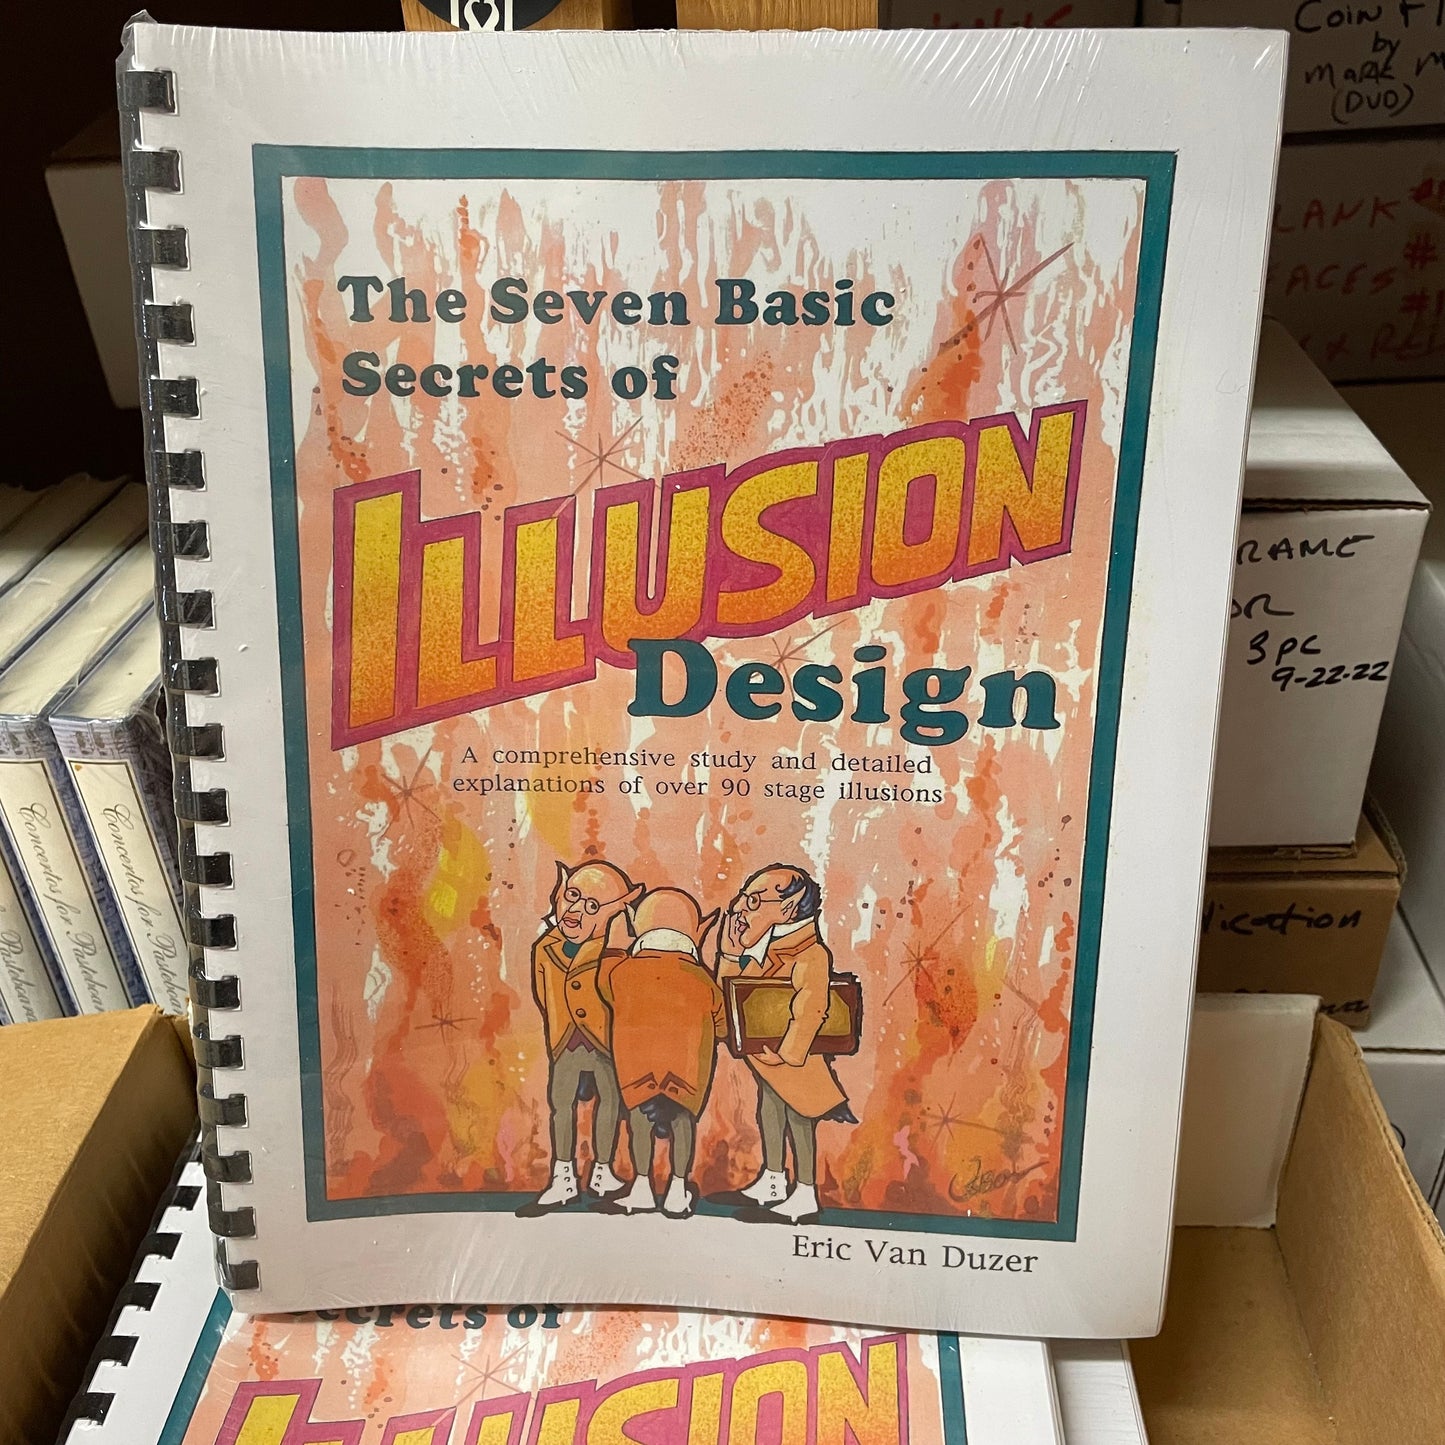 The Seven Basic Secrets of Illusion Design by Van Duzer